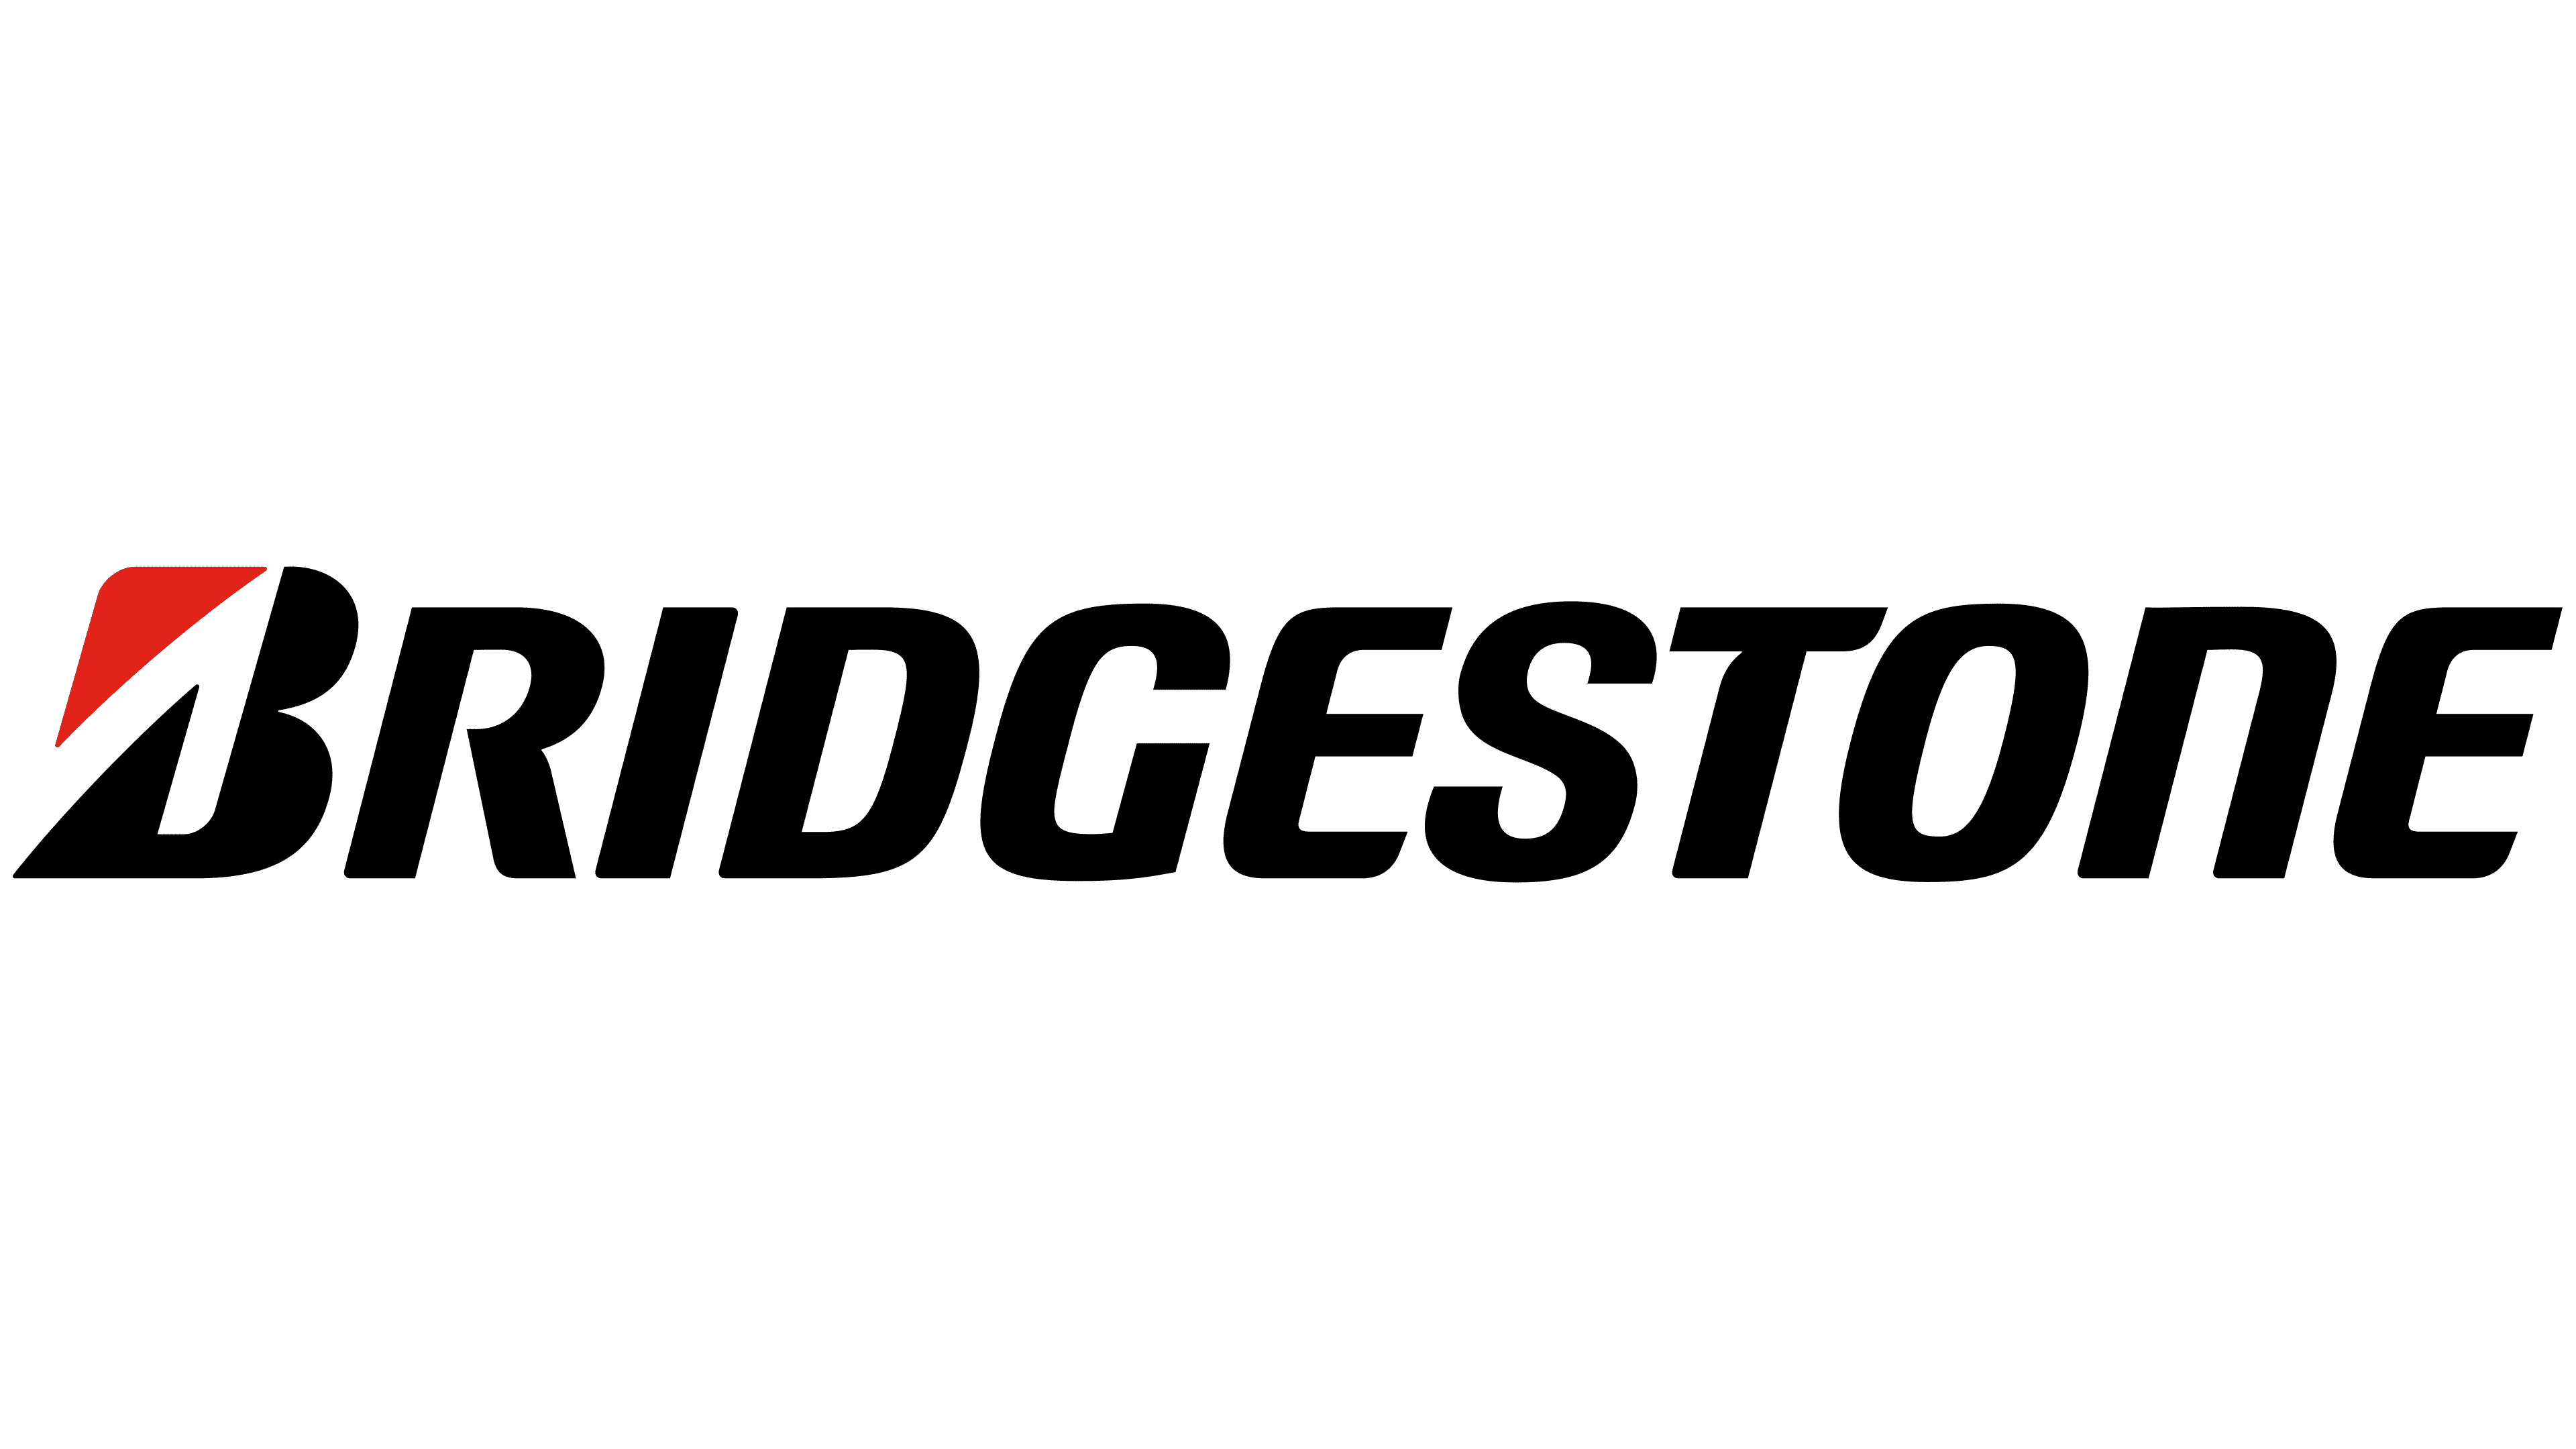 bridgestone-logo-symbol-meaning-history-png-brand